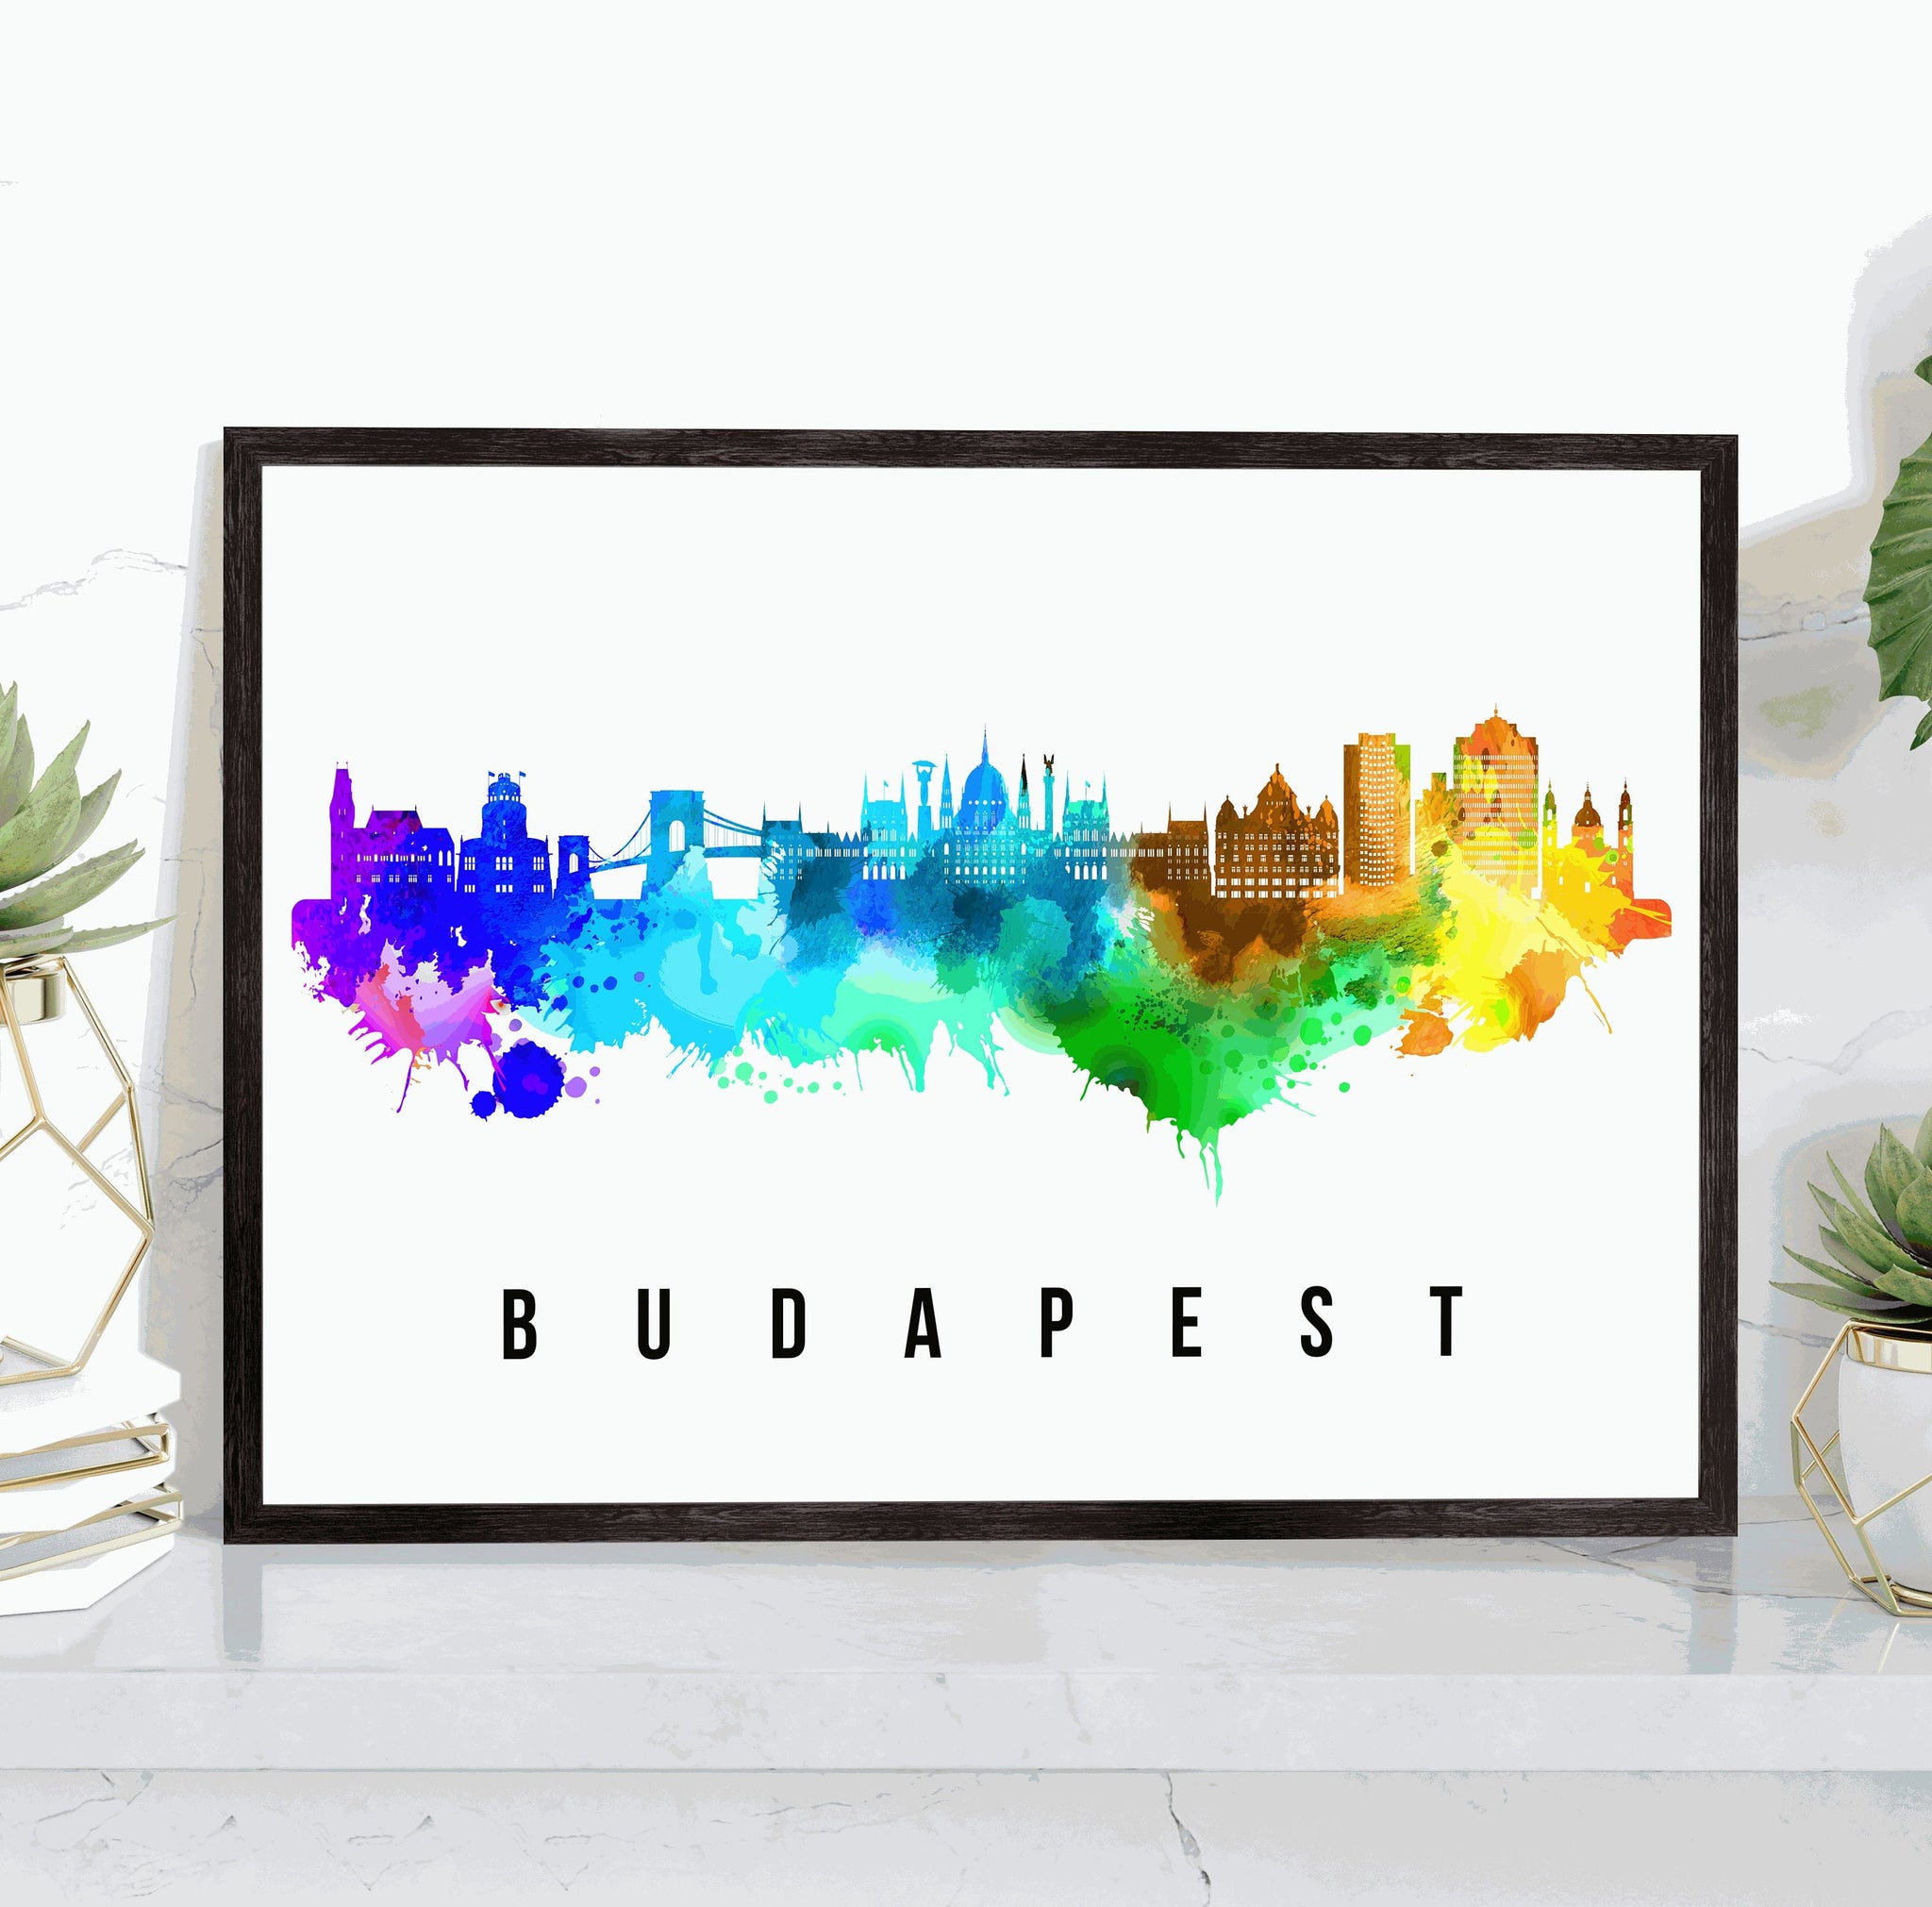 BUDAPEST - HUNGARY Poster, Skyline Poster Cityscape and Landmark Budapest City Illustration Home Wall Art, Office Decor